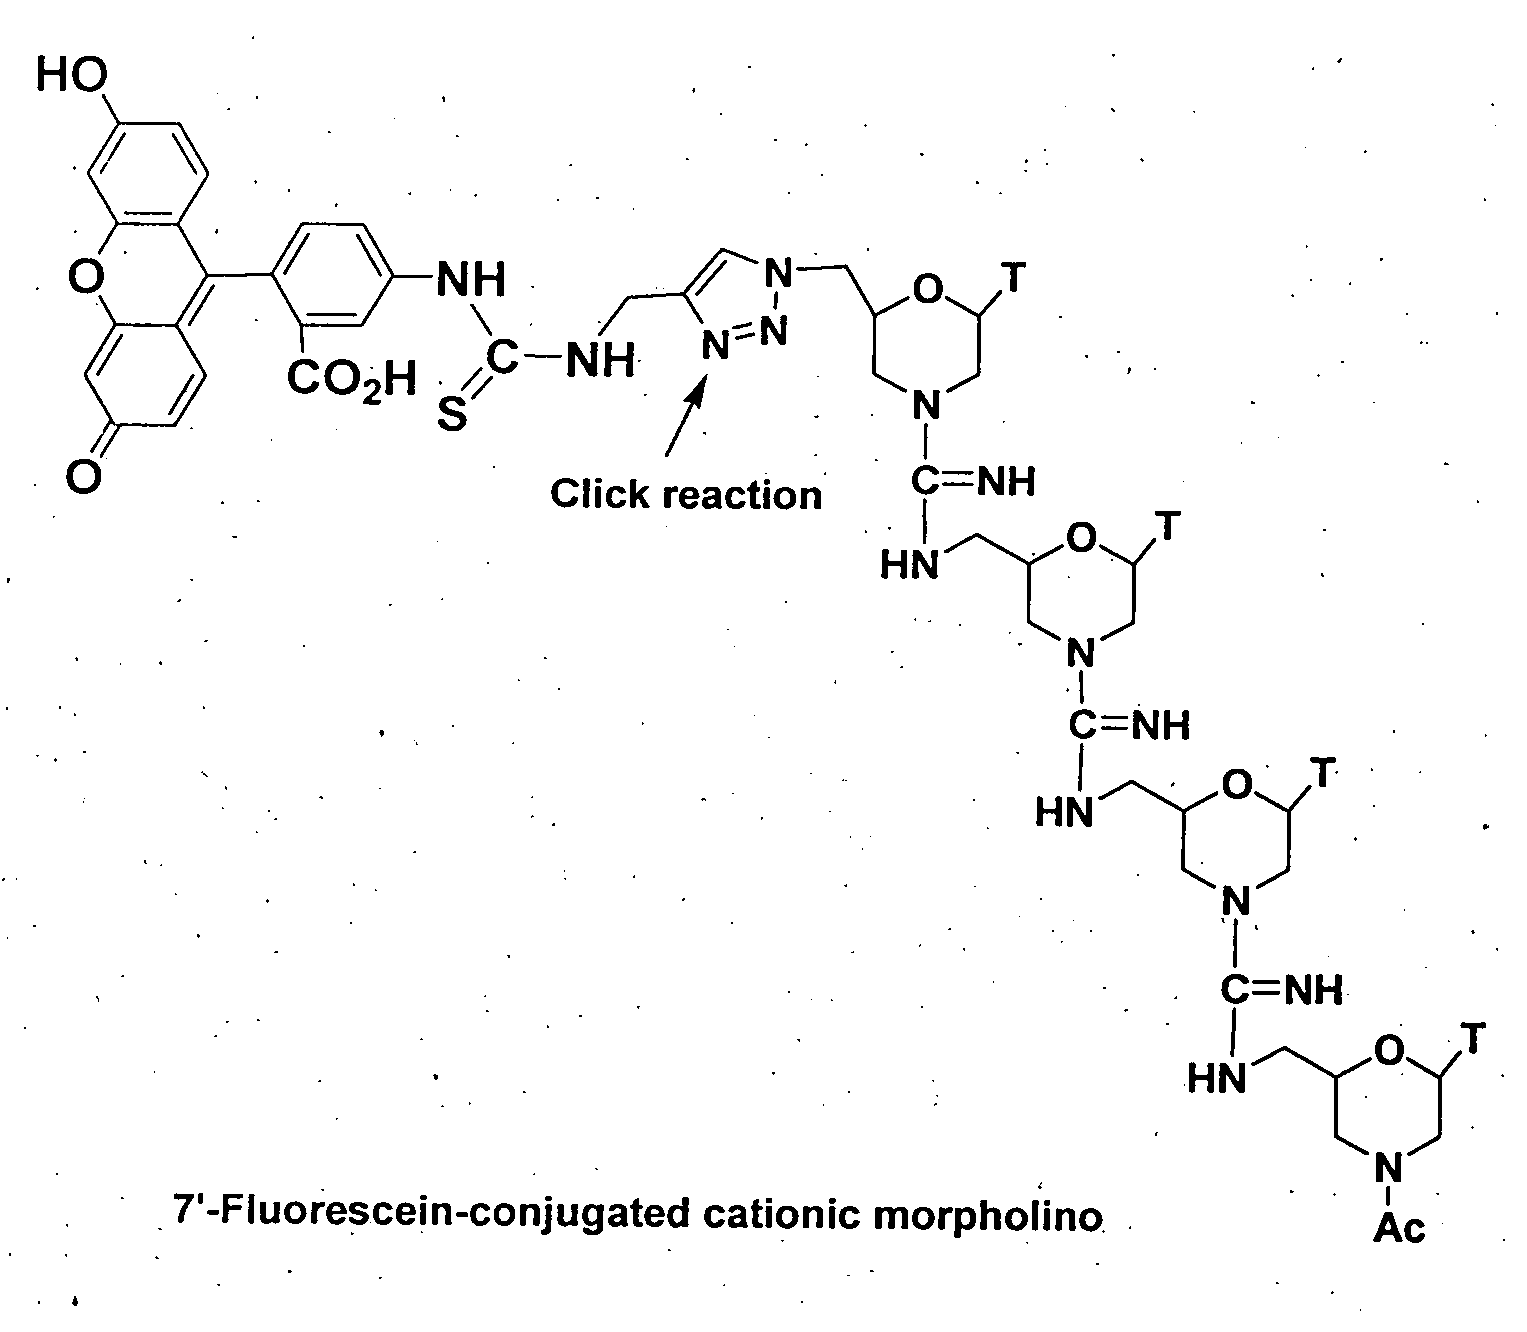 Morpholino-based antisense agent